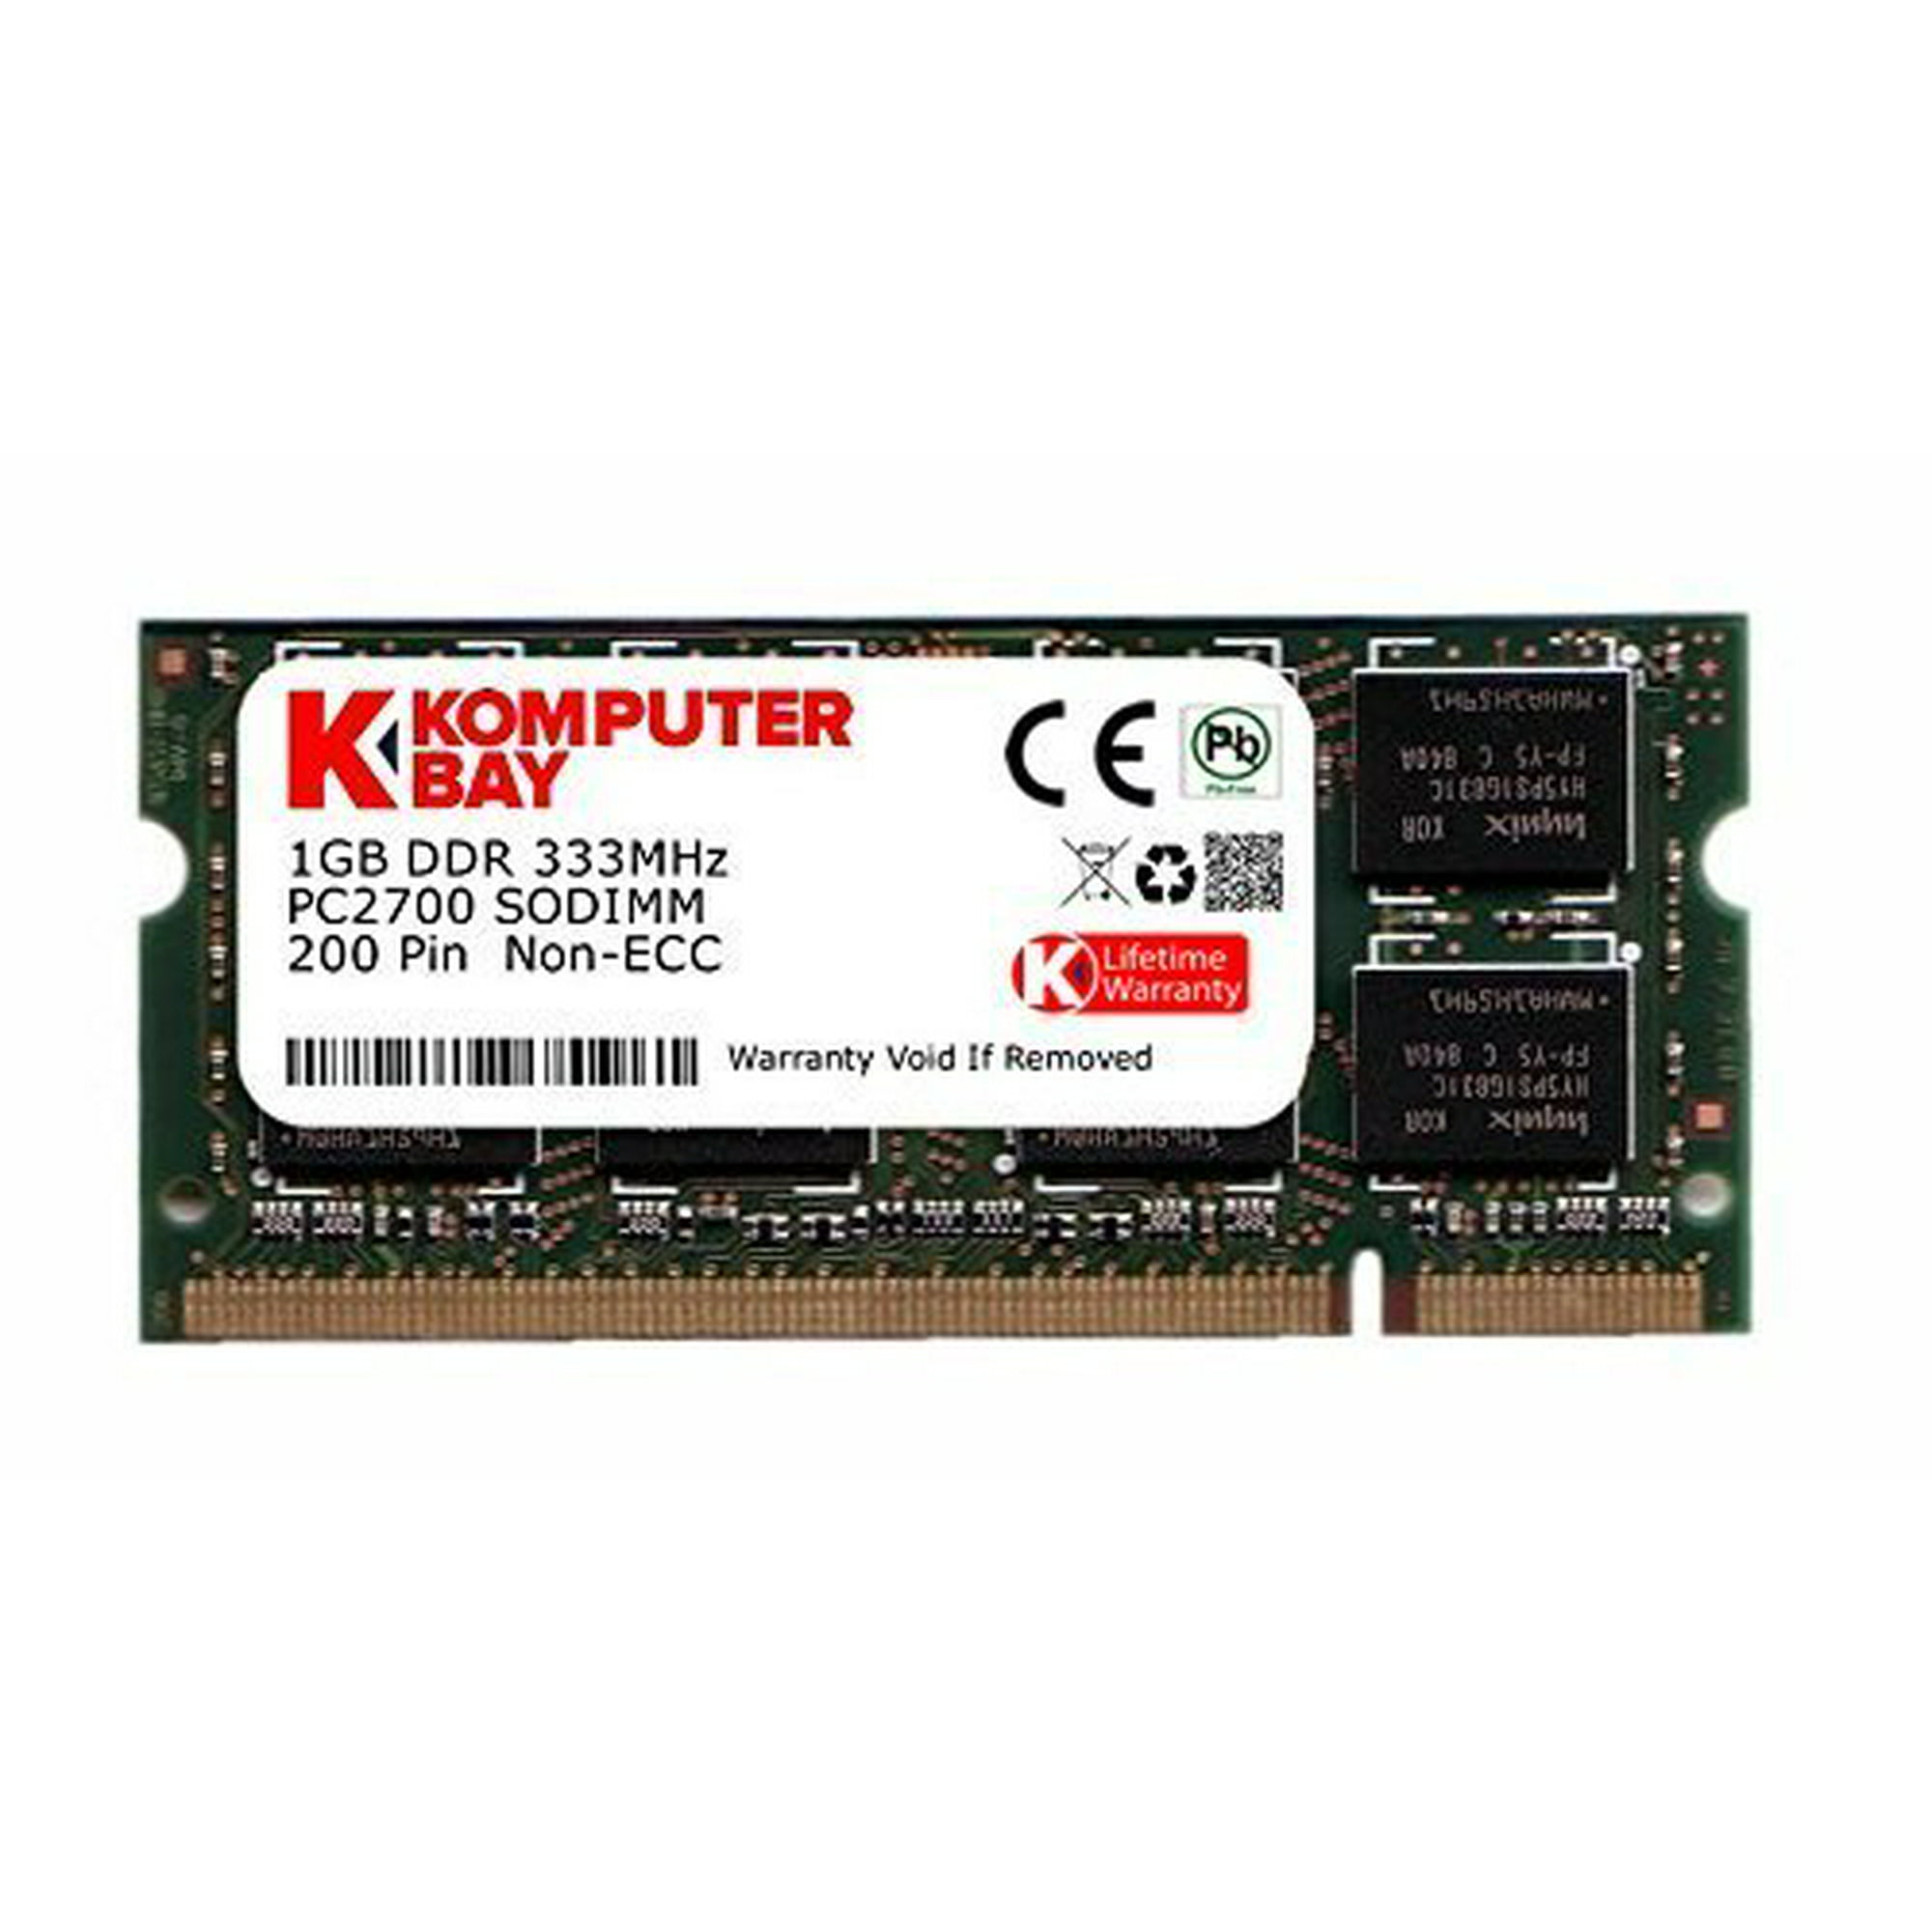 Komputerbay 1GB DDR (200 pin) DDR333 MEMORY | Walmart Canada